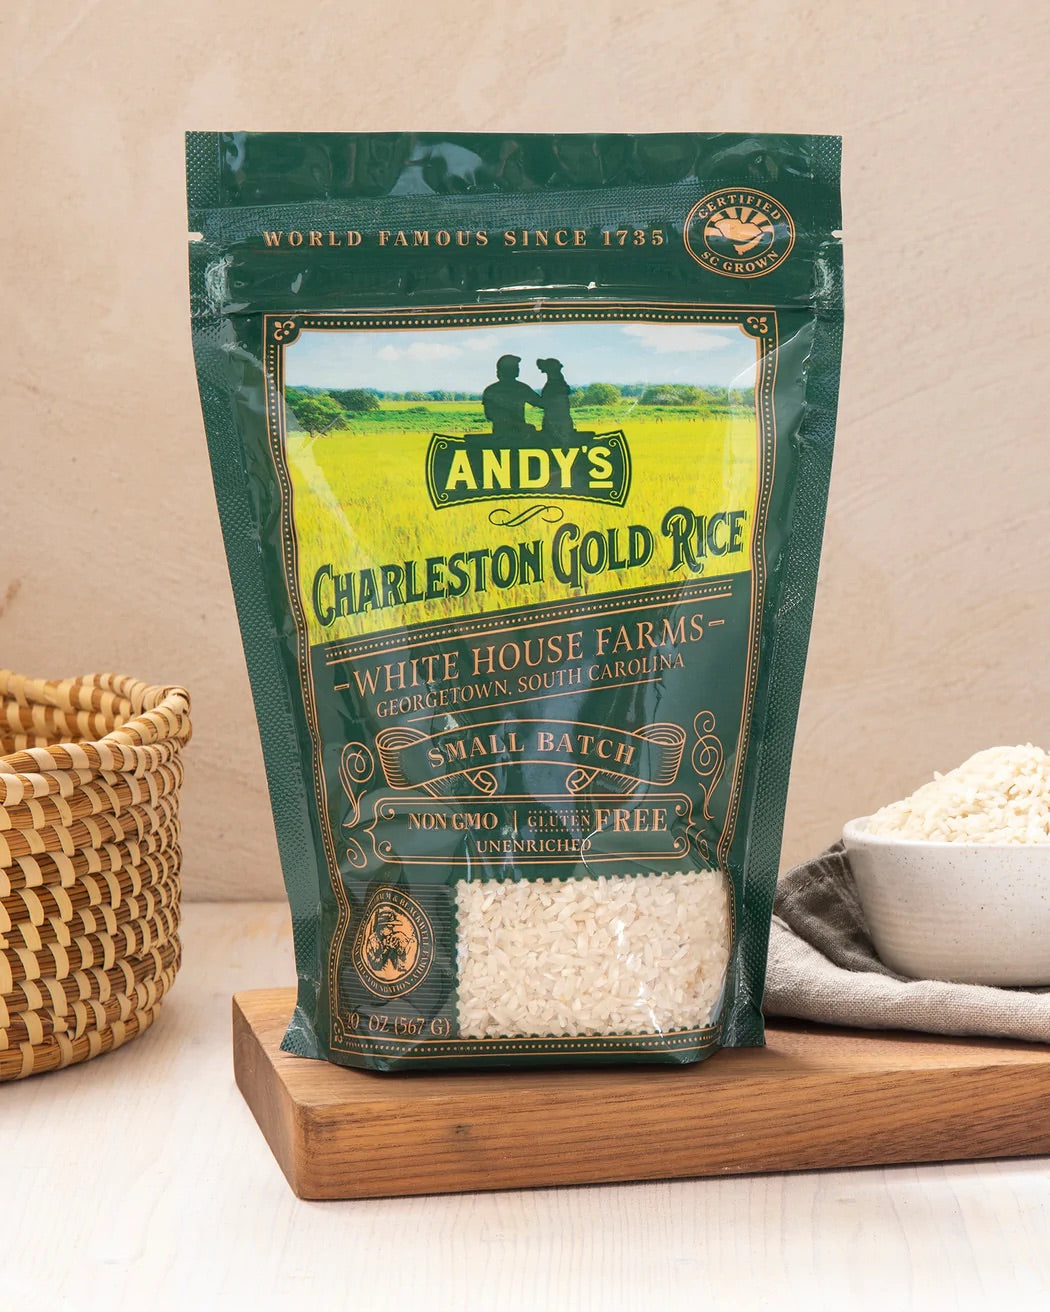 "Andy's" Charleston Gold Rice